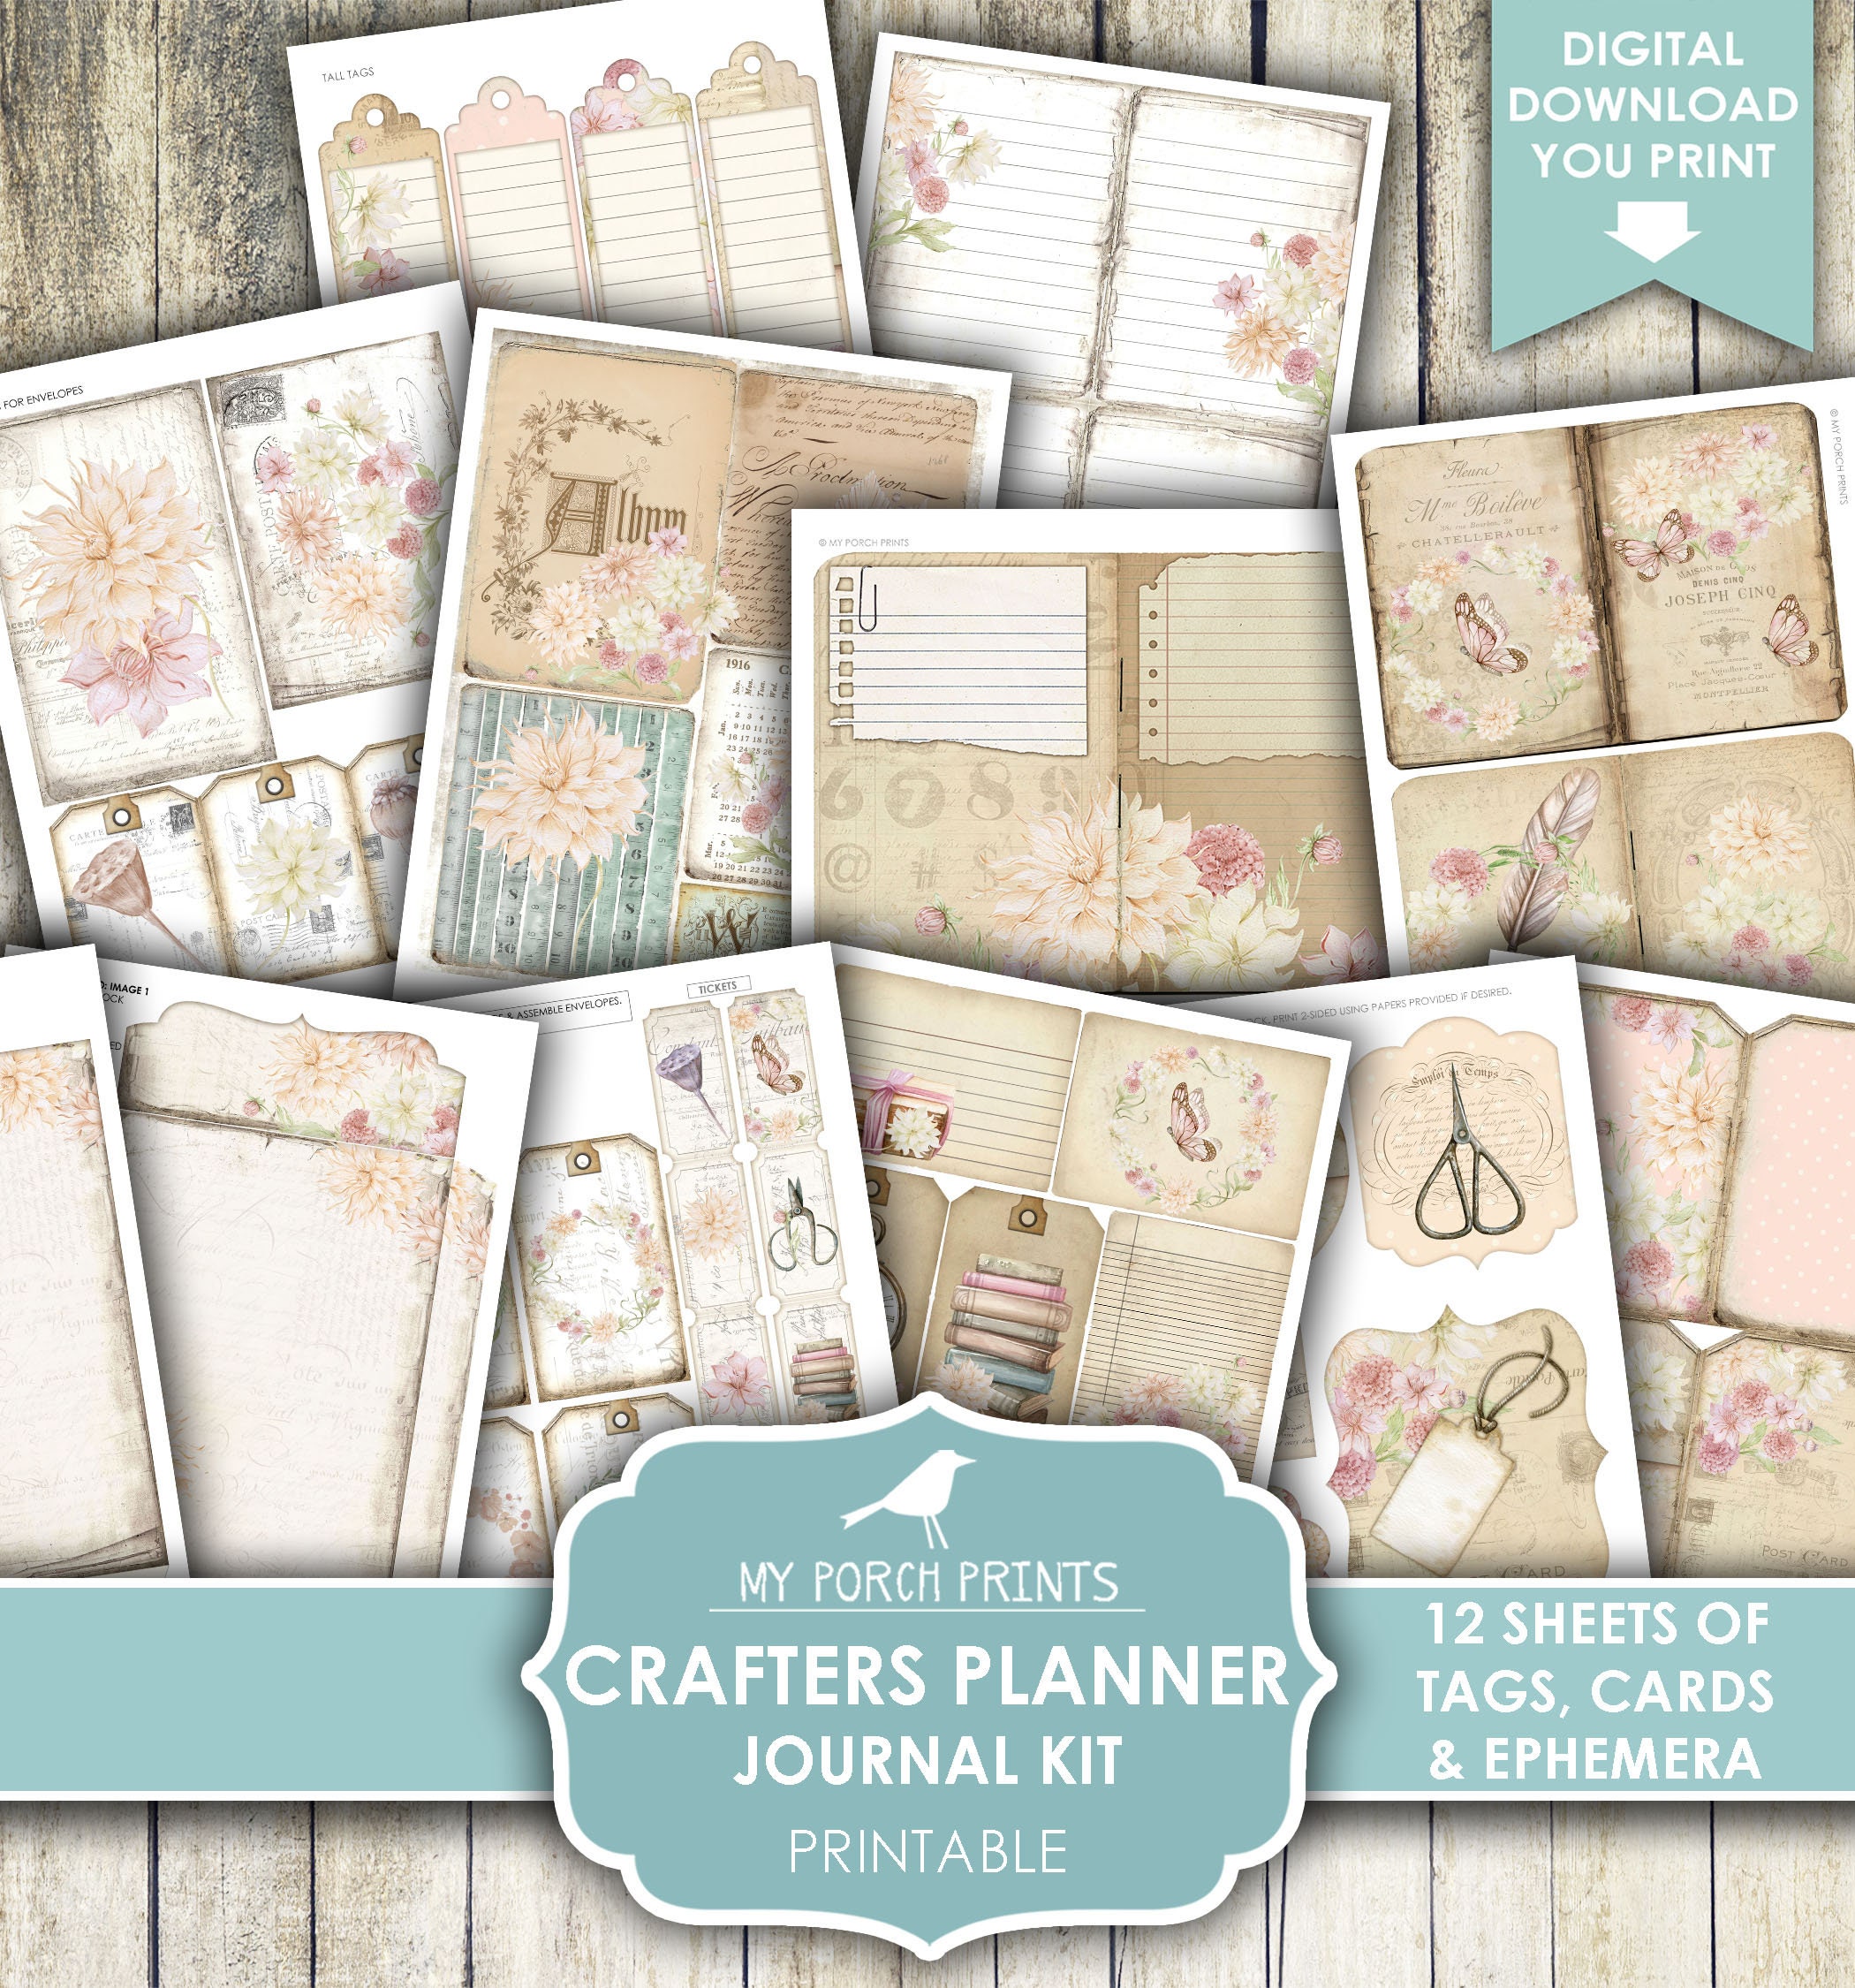 Crafters Planner, Junk Journal Kit, Calendar, Dahlias, Boho, Shabby,  Cottagecore, Ephemera, My Porch Prints, Digital Download, Printable 